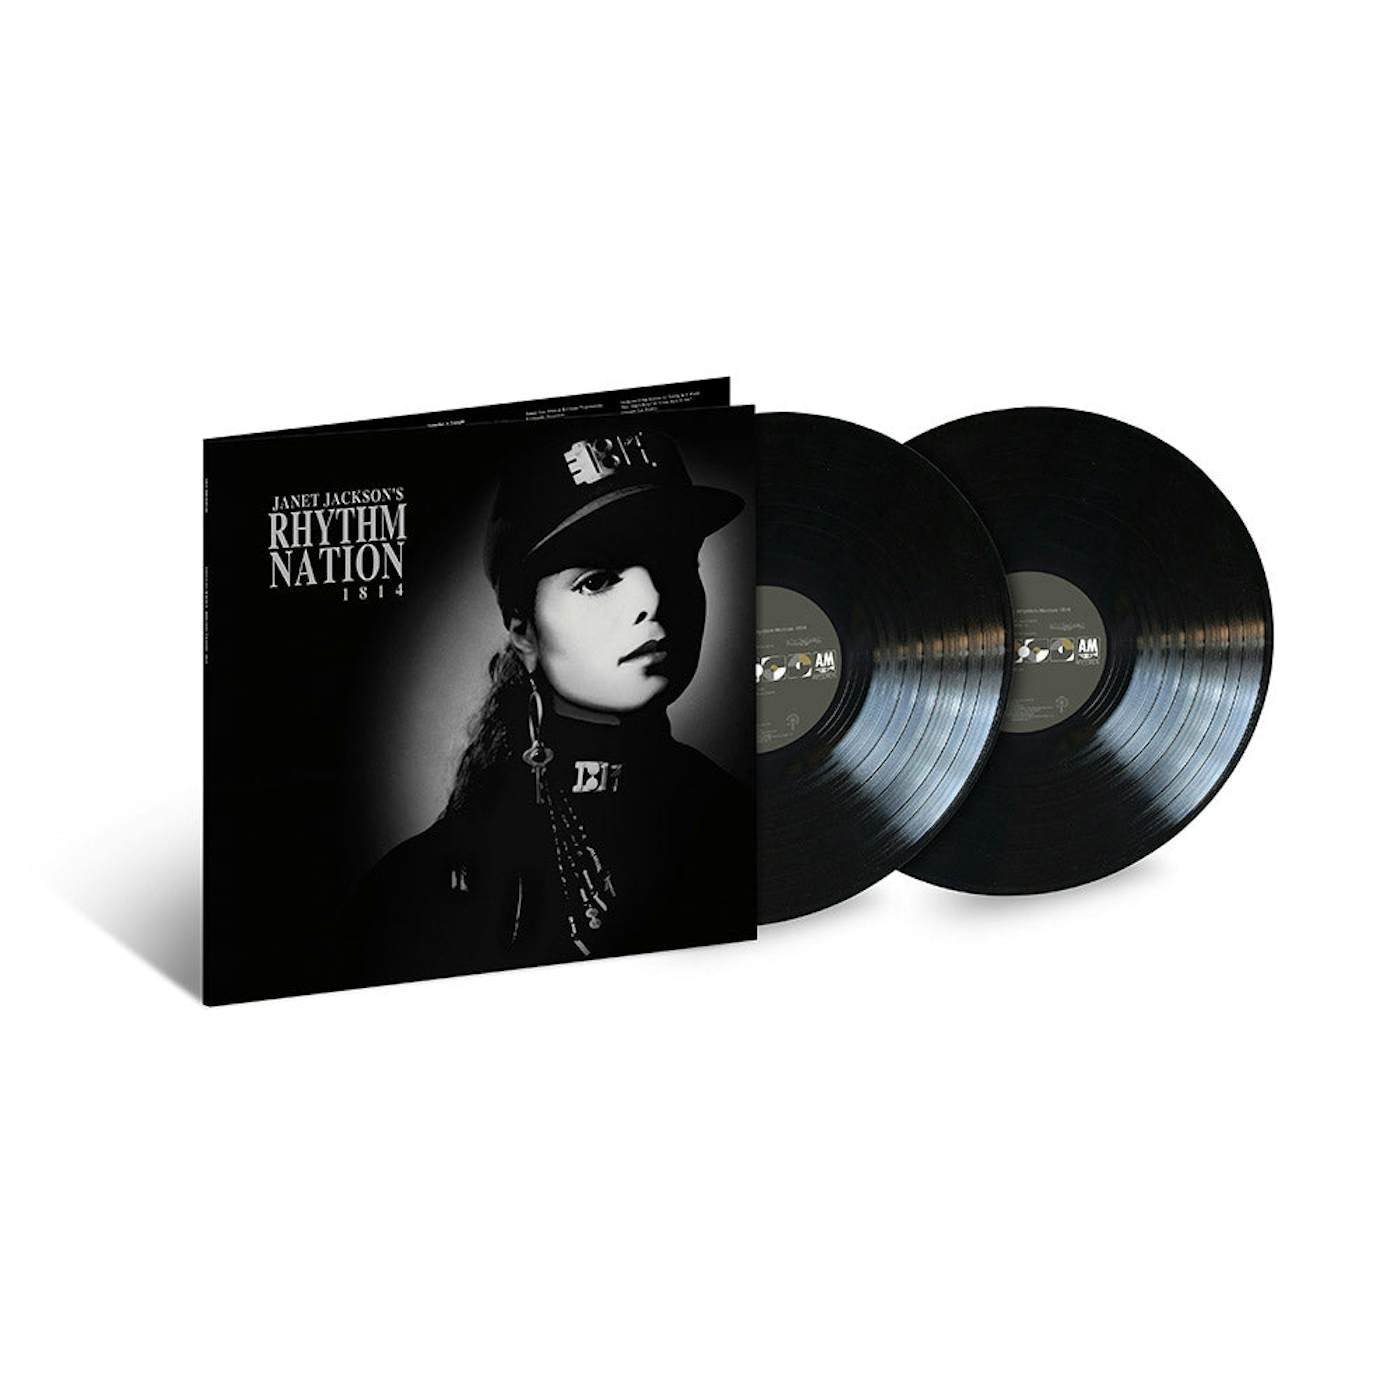  Janet Jackson's Rhythm Nation 2LP (Vinyl)